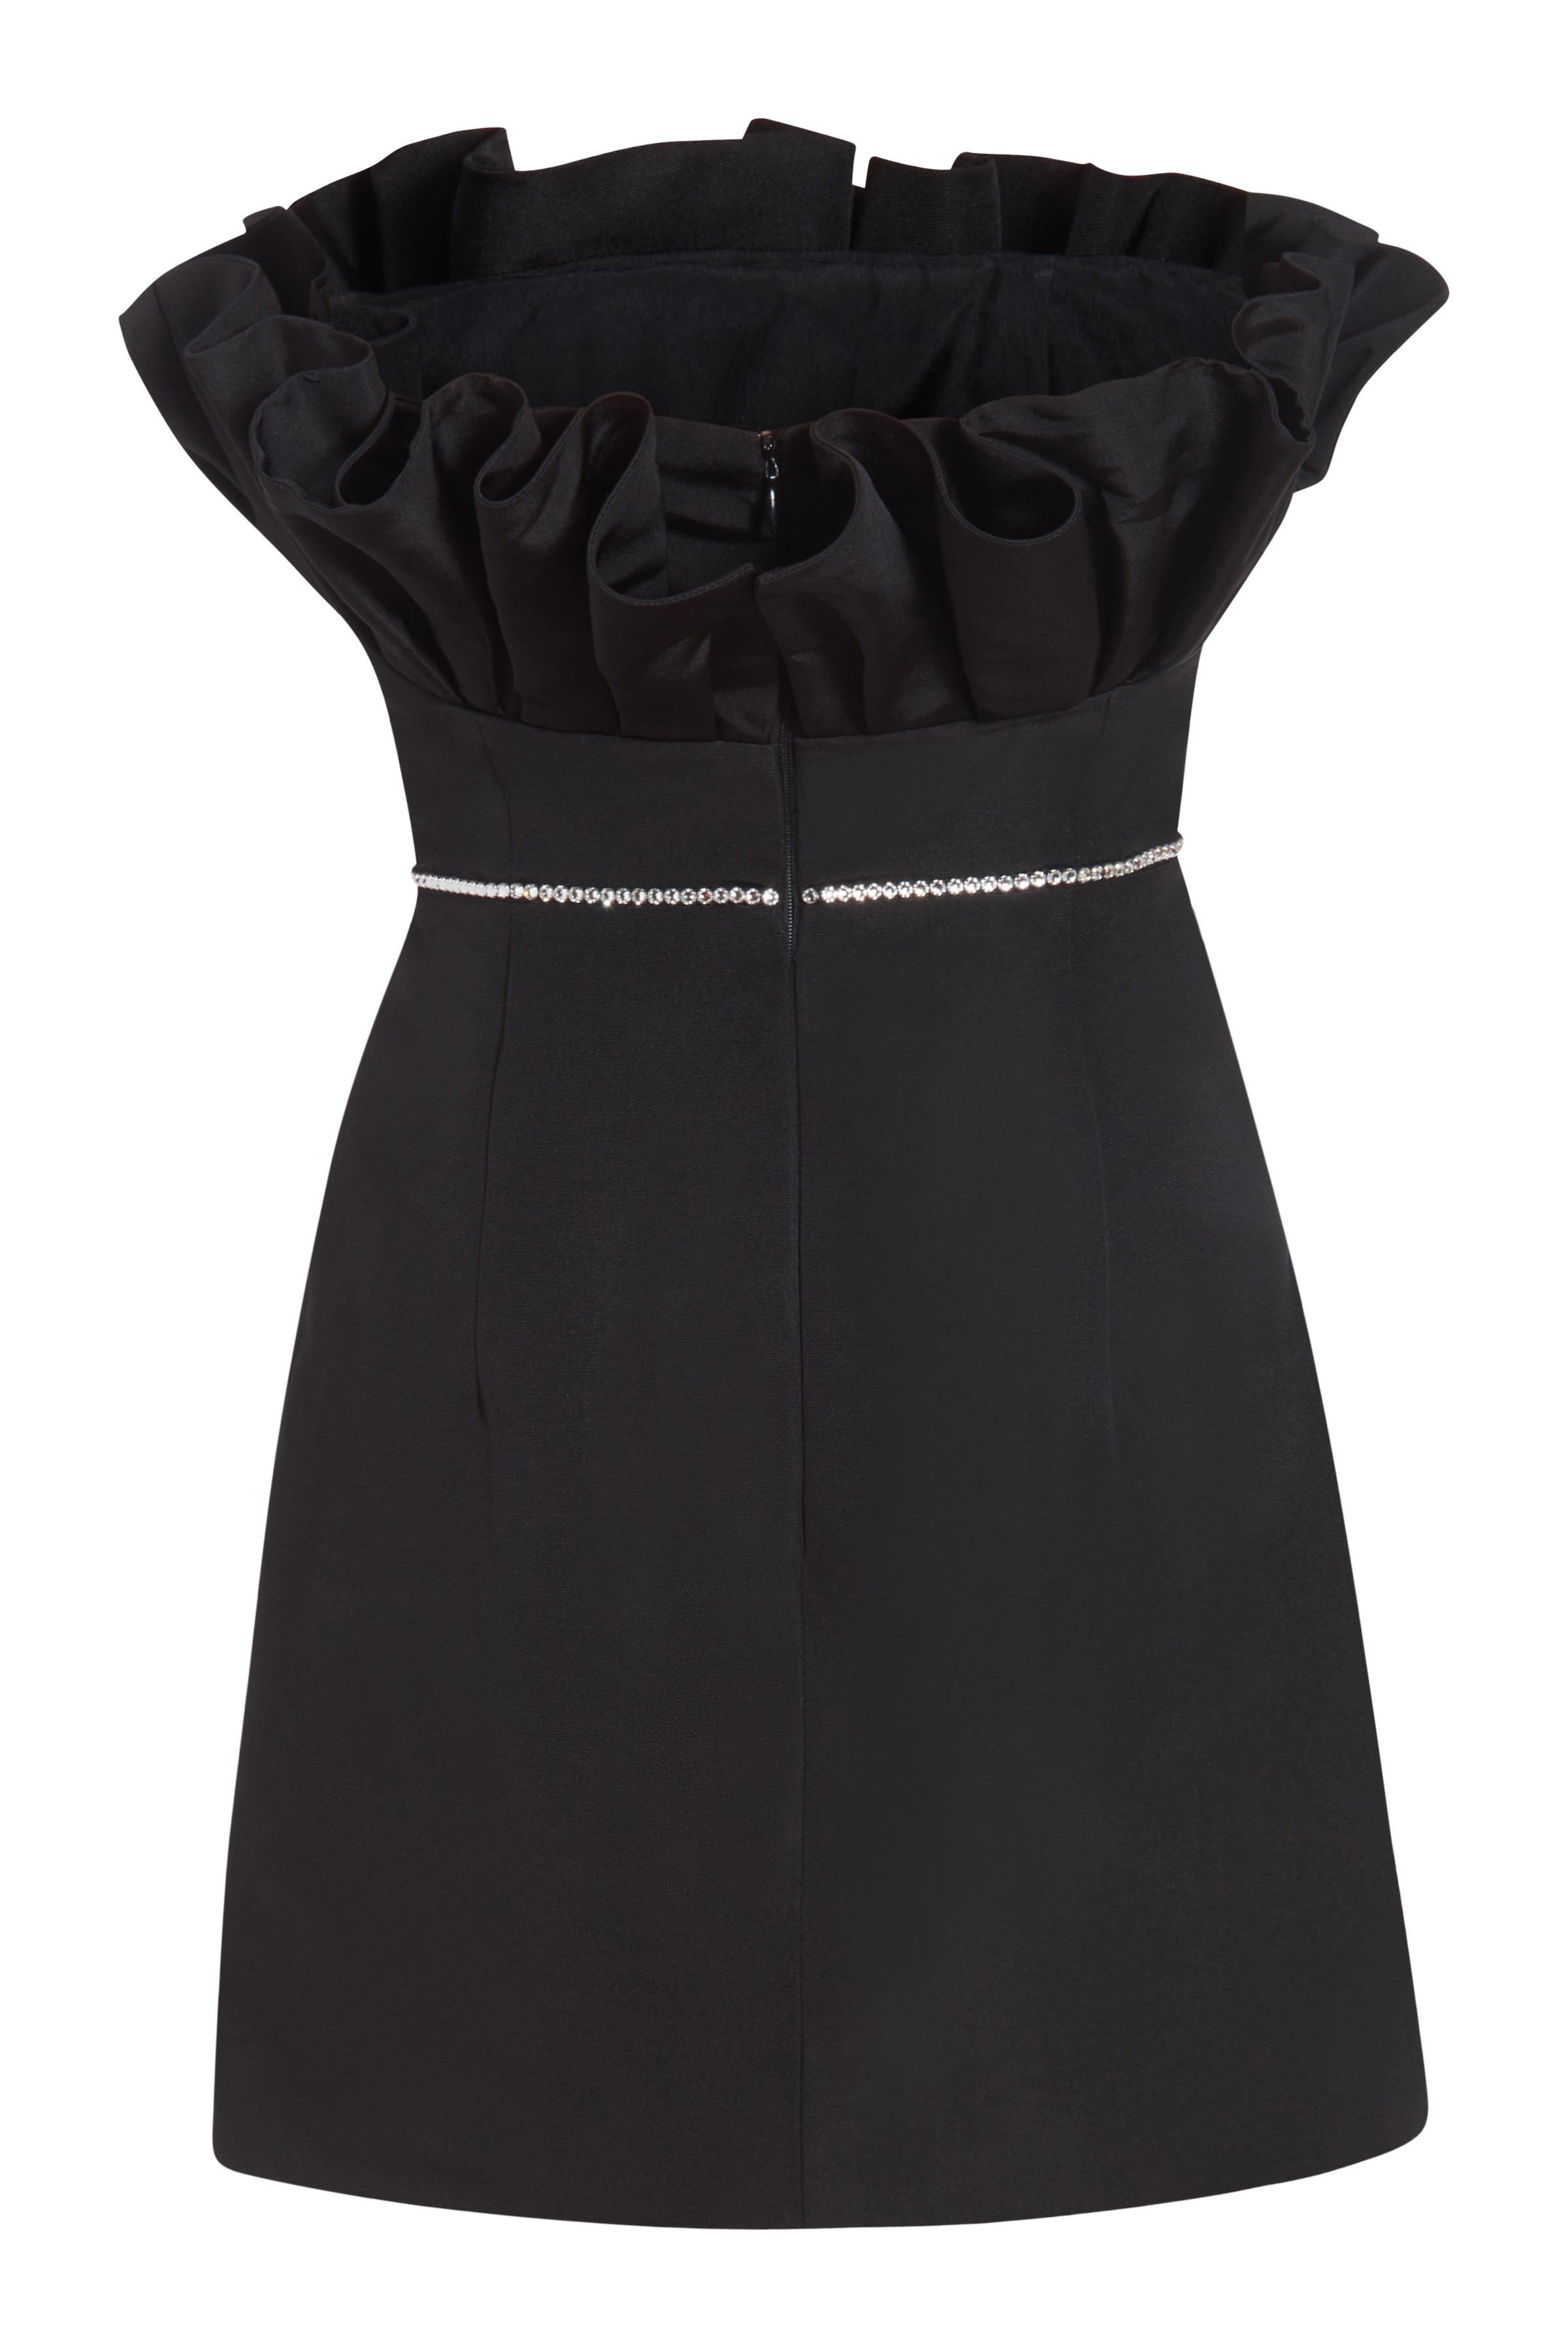 SALE: Thunderbird Black Mini Dress